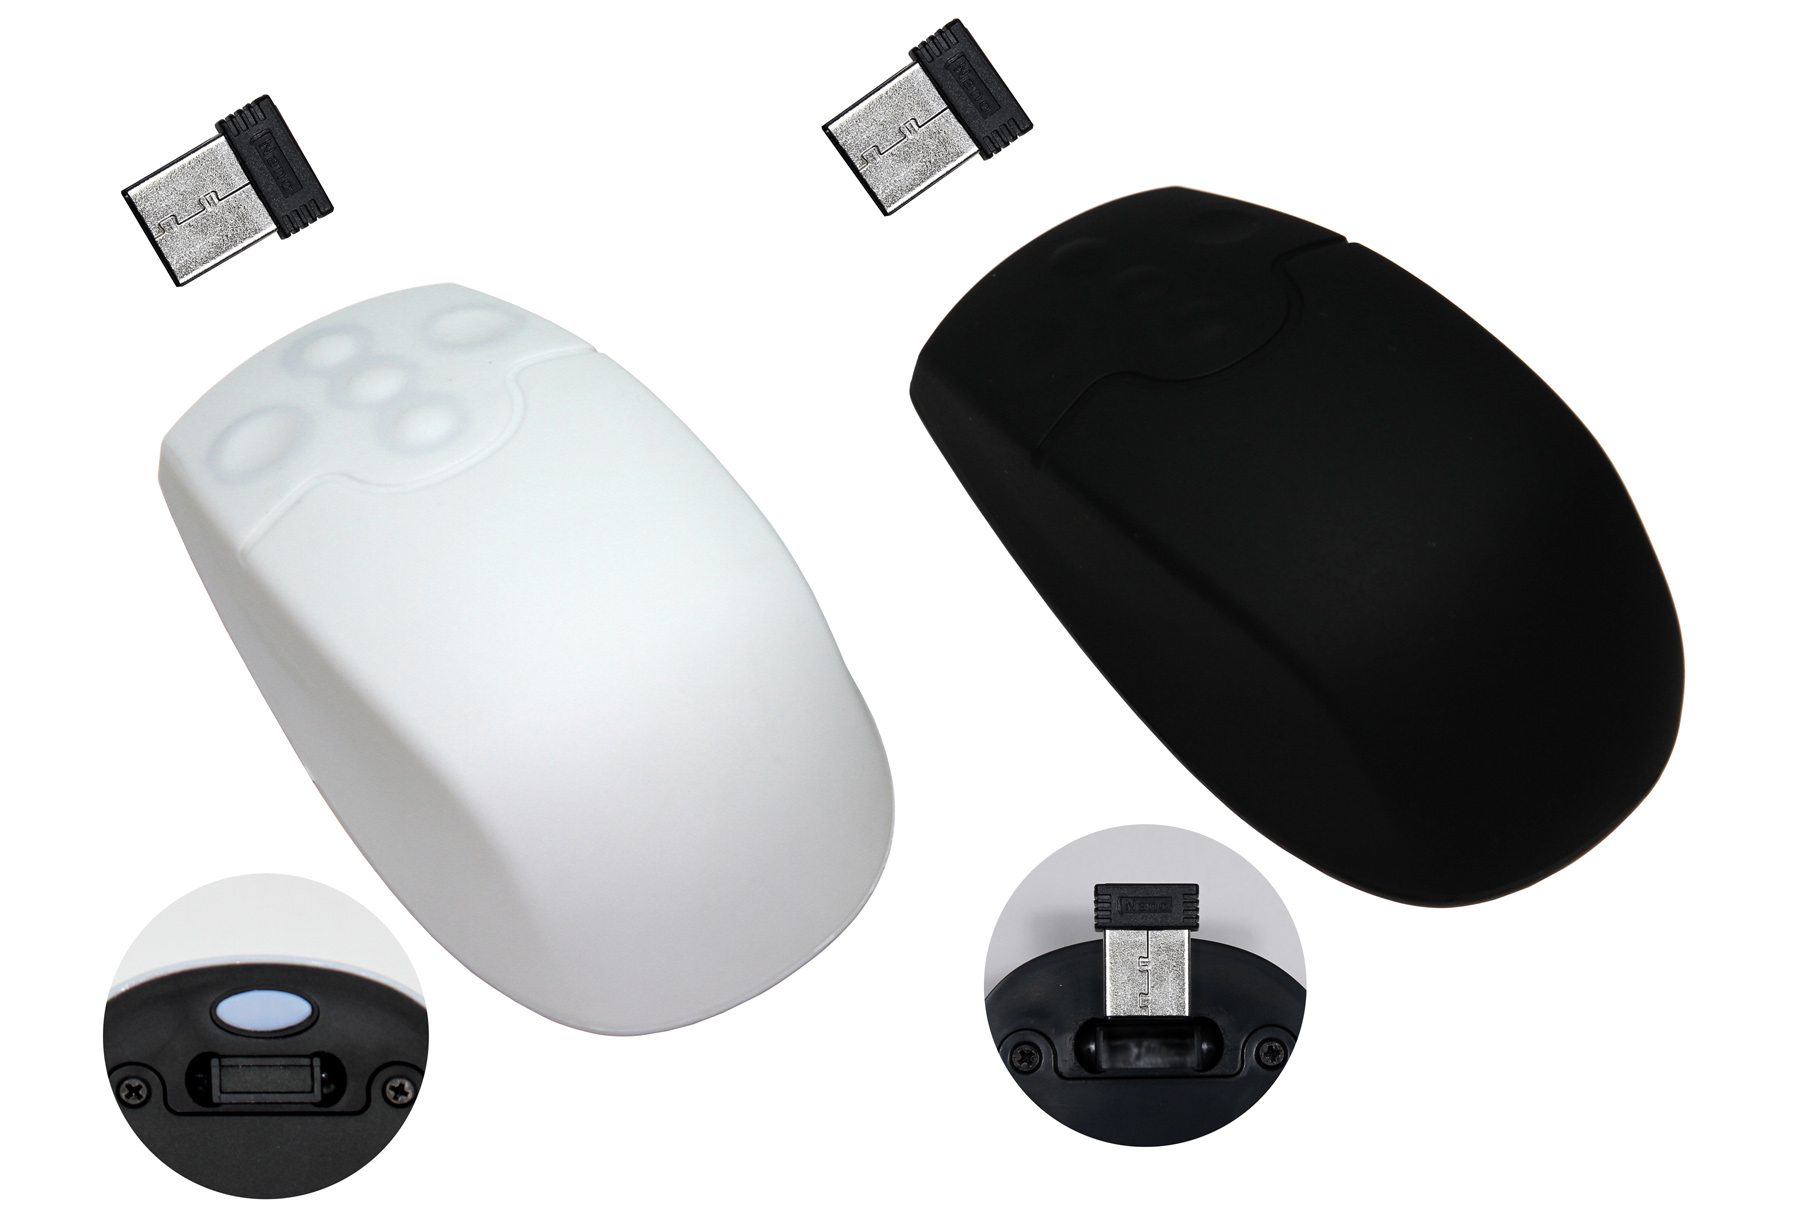 Беспроводная мышь Wireless Mouse 2/4ghz Wireless Technology. 2.4 GHZ Wireless флешка. Беспроводная оптическая мышь 360 6d гироскоп. Мышь ip68. Беспроводная air мышь